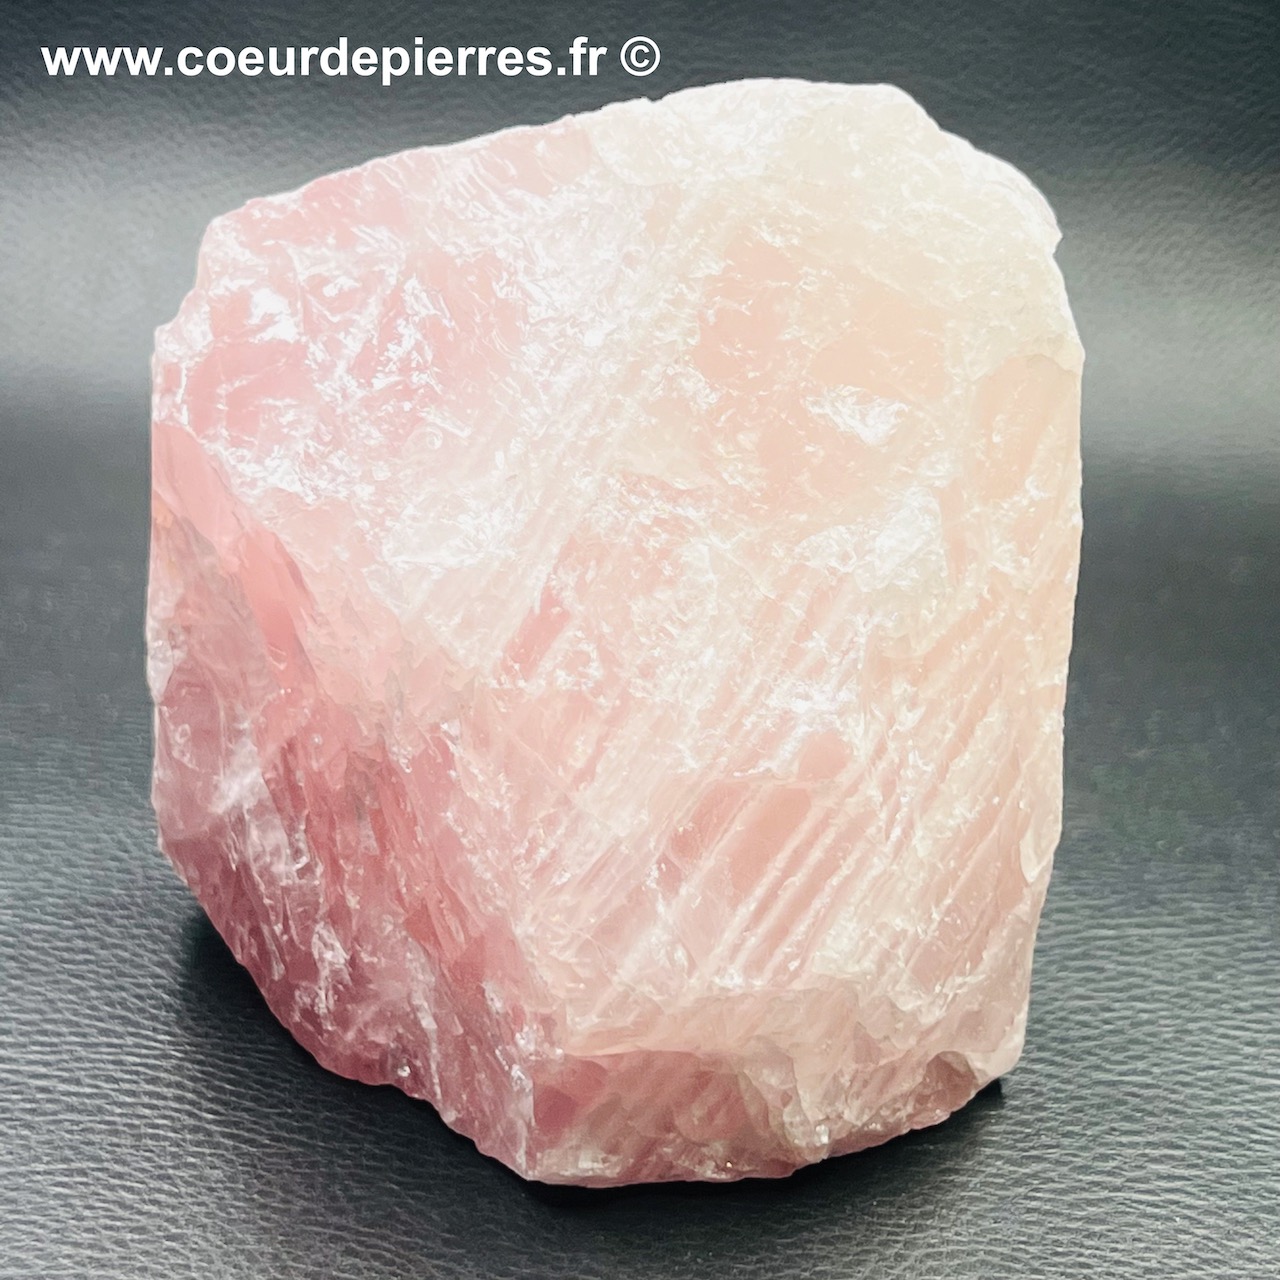 Bloc brut de quartz rose de Madagascar (réf prb11)